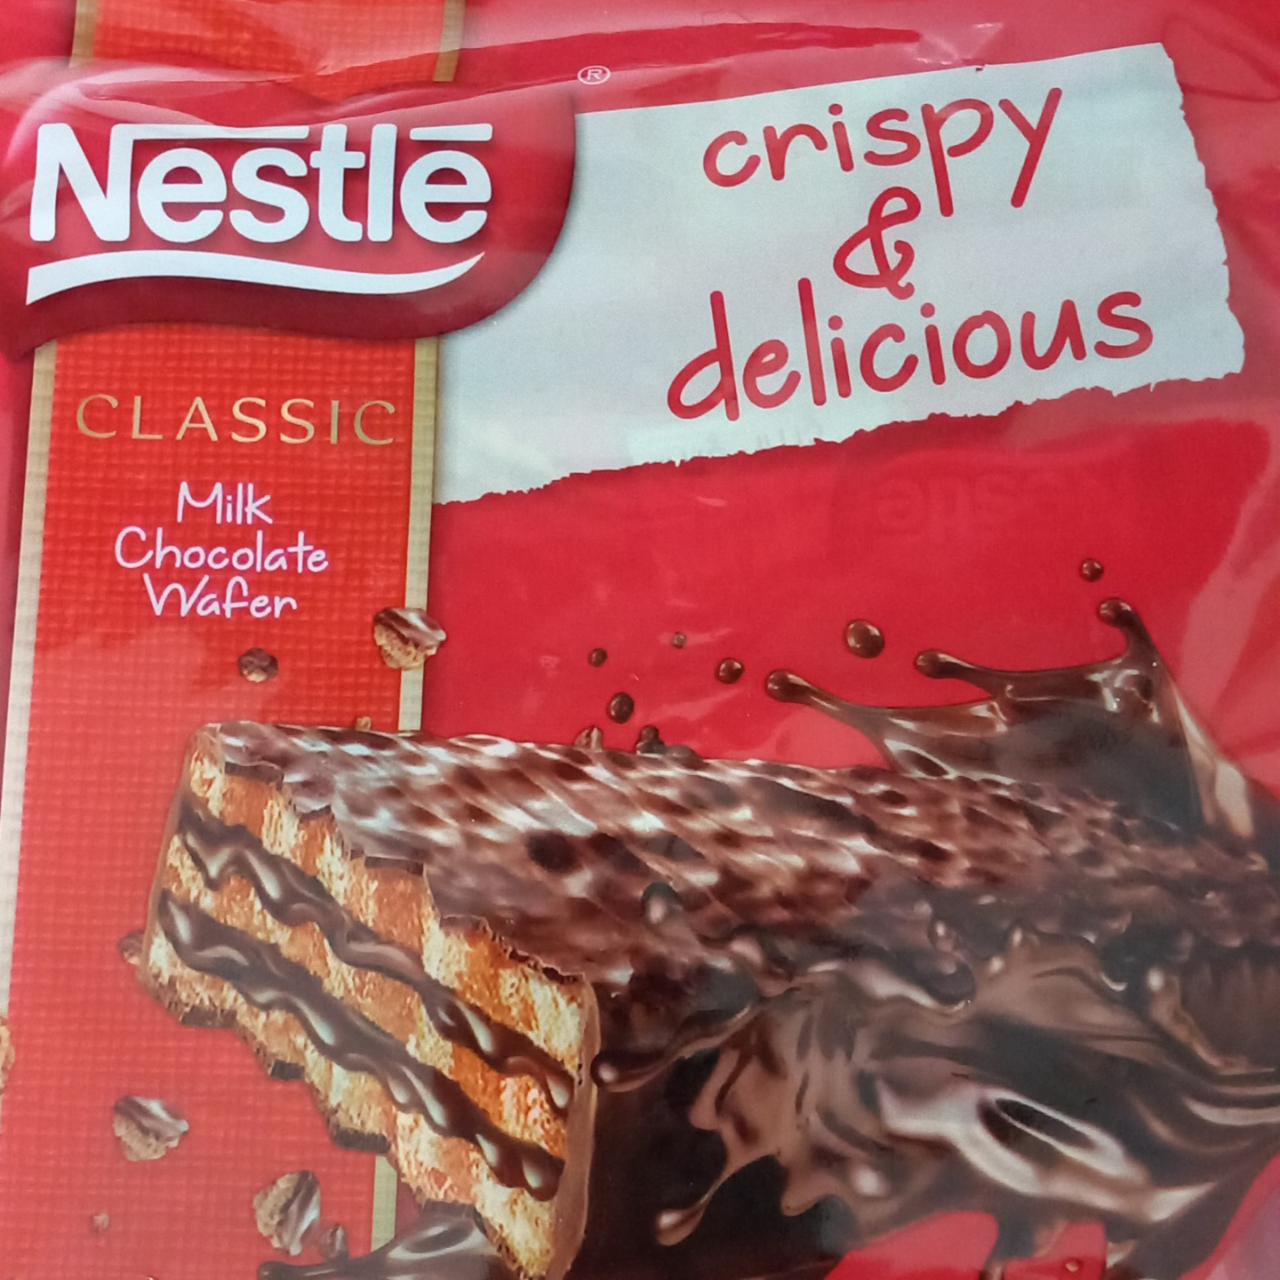 Fotografie - Crispy & delicious Classic Milk Chocolate Wafer Nestlé